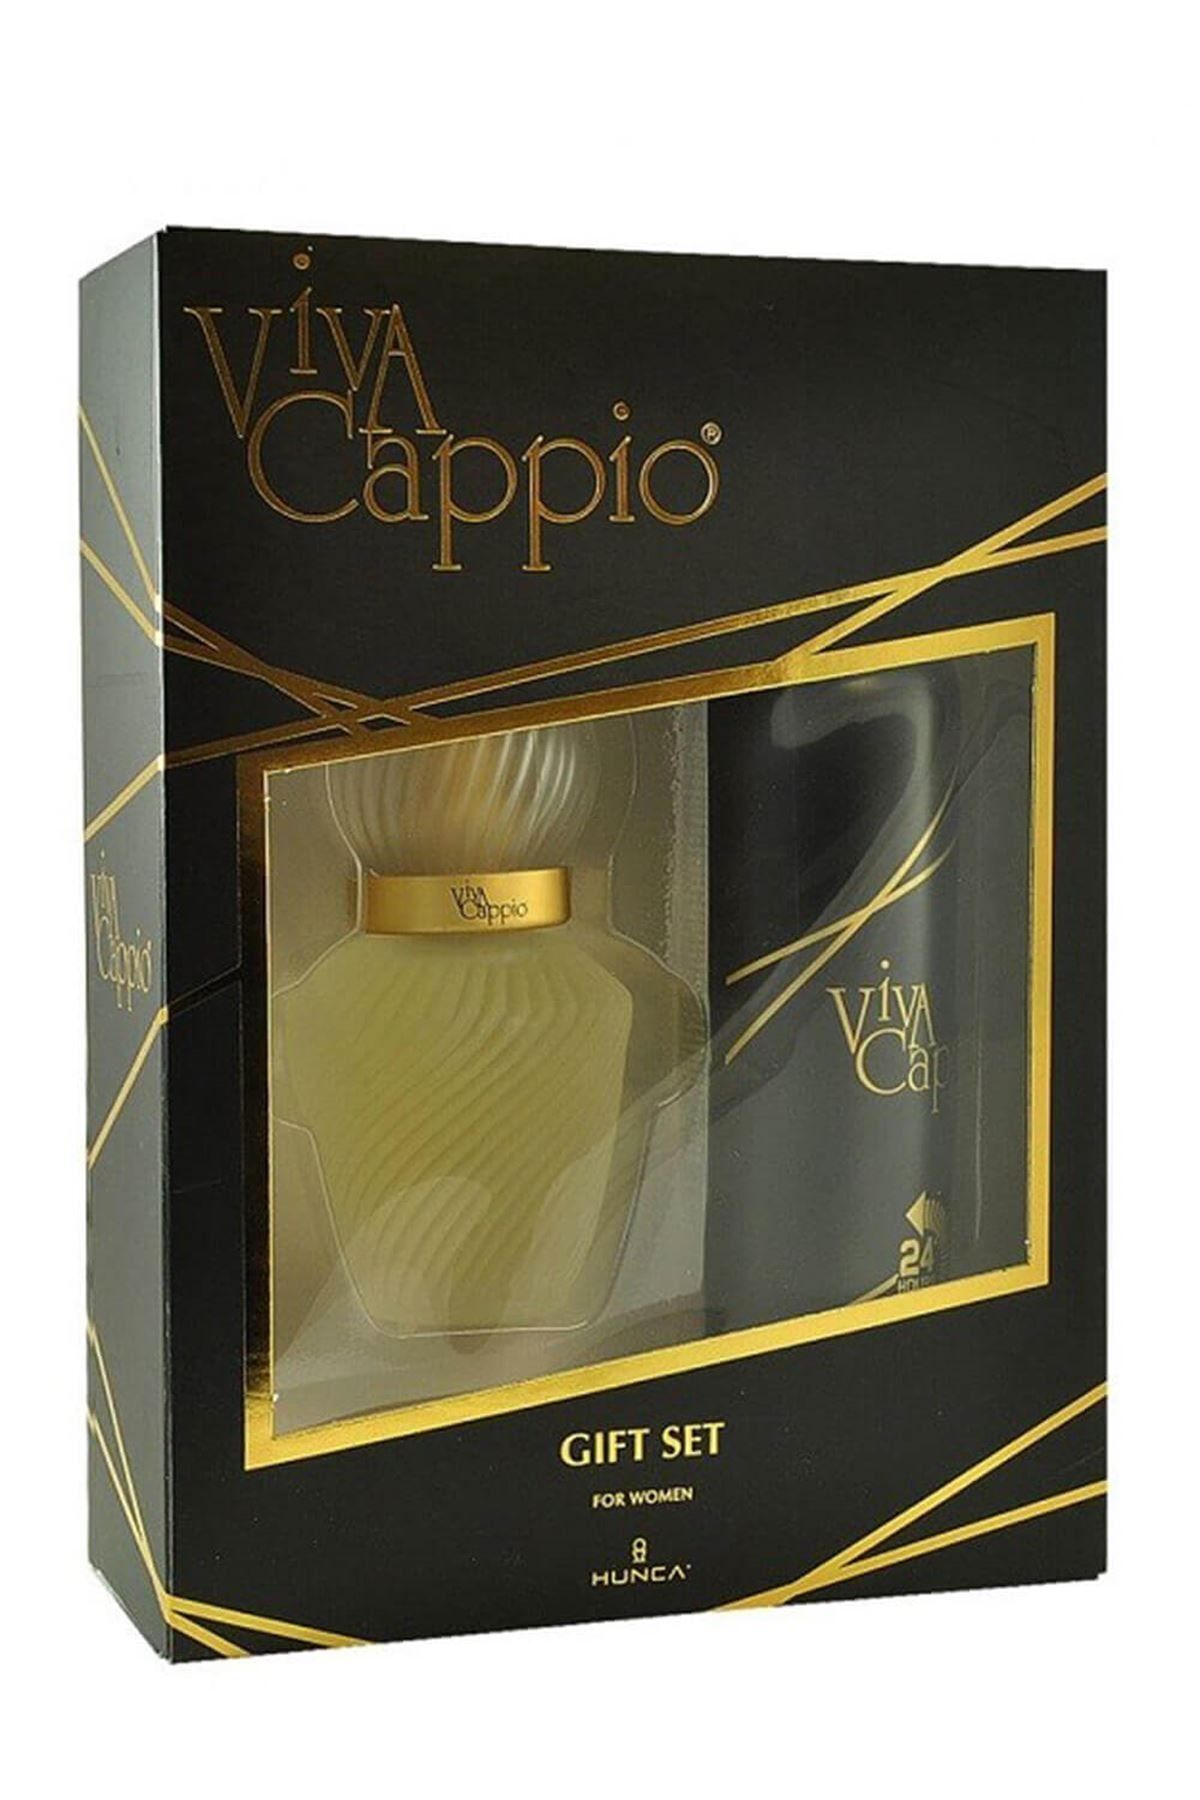 Viva Classic Edt 60 ml Kadın Parfüm Set viva-cappio-904-kfr